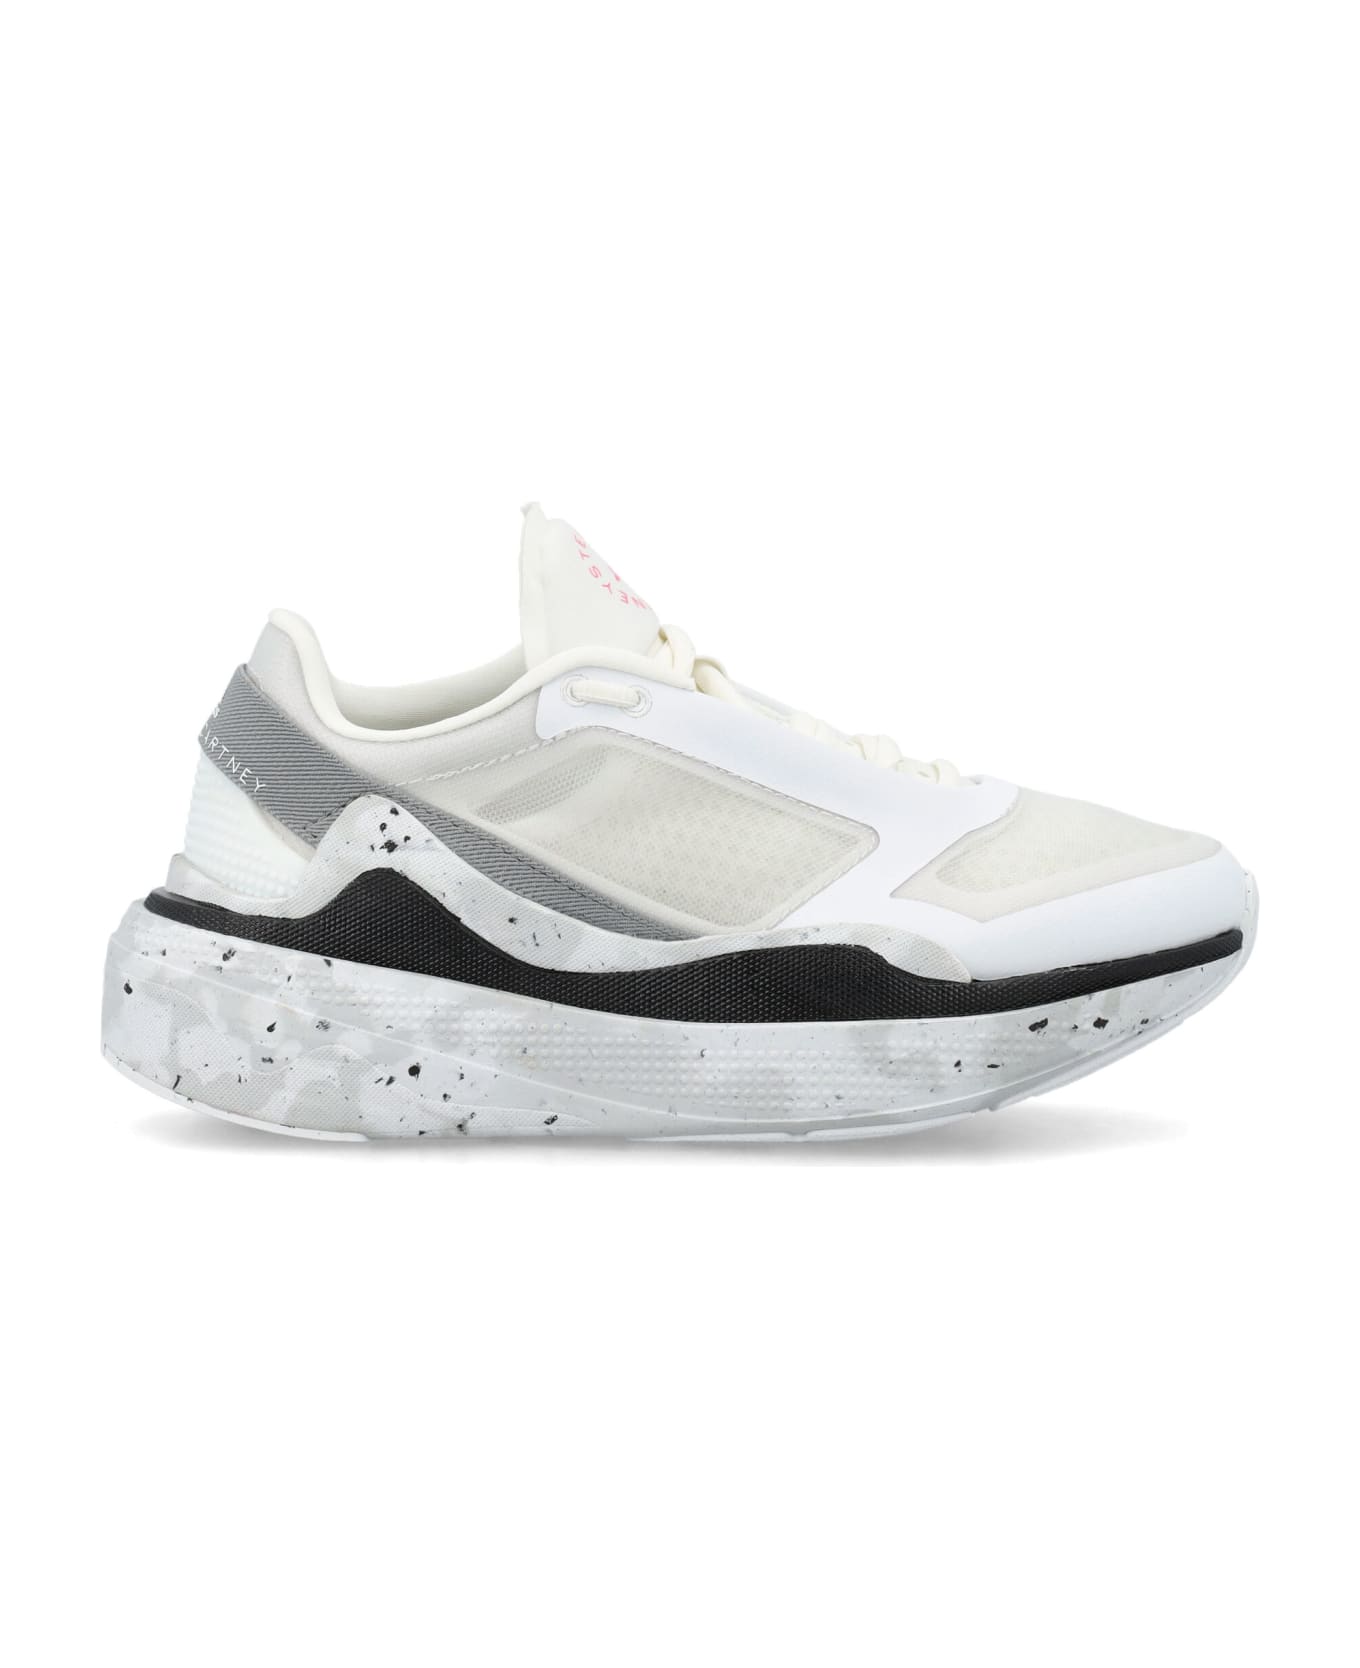 Adidas by Stella McCartney Eartlight Mesh Running Shoes - WHITE/GREY/BLACK